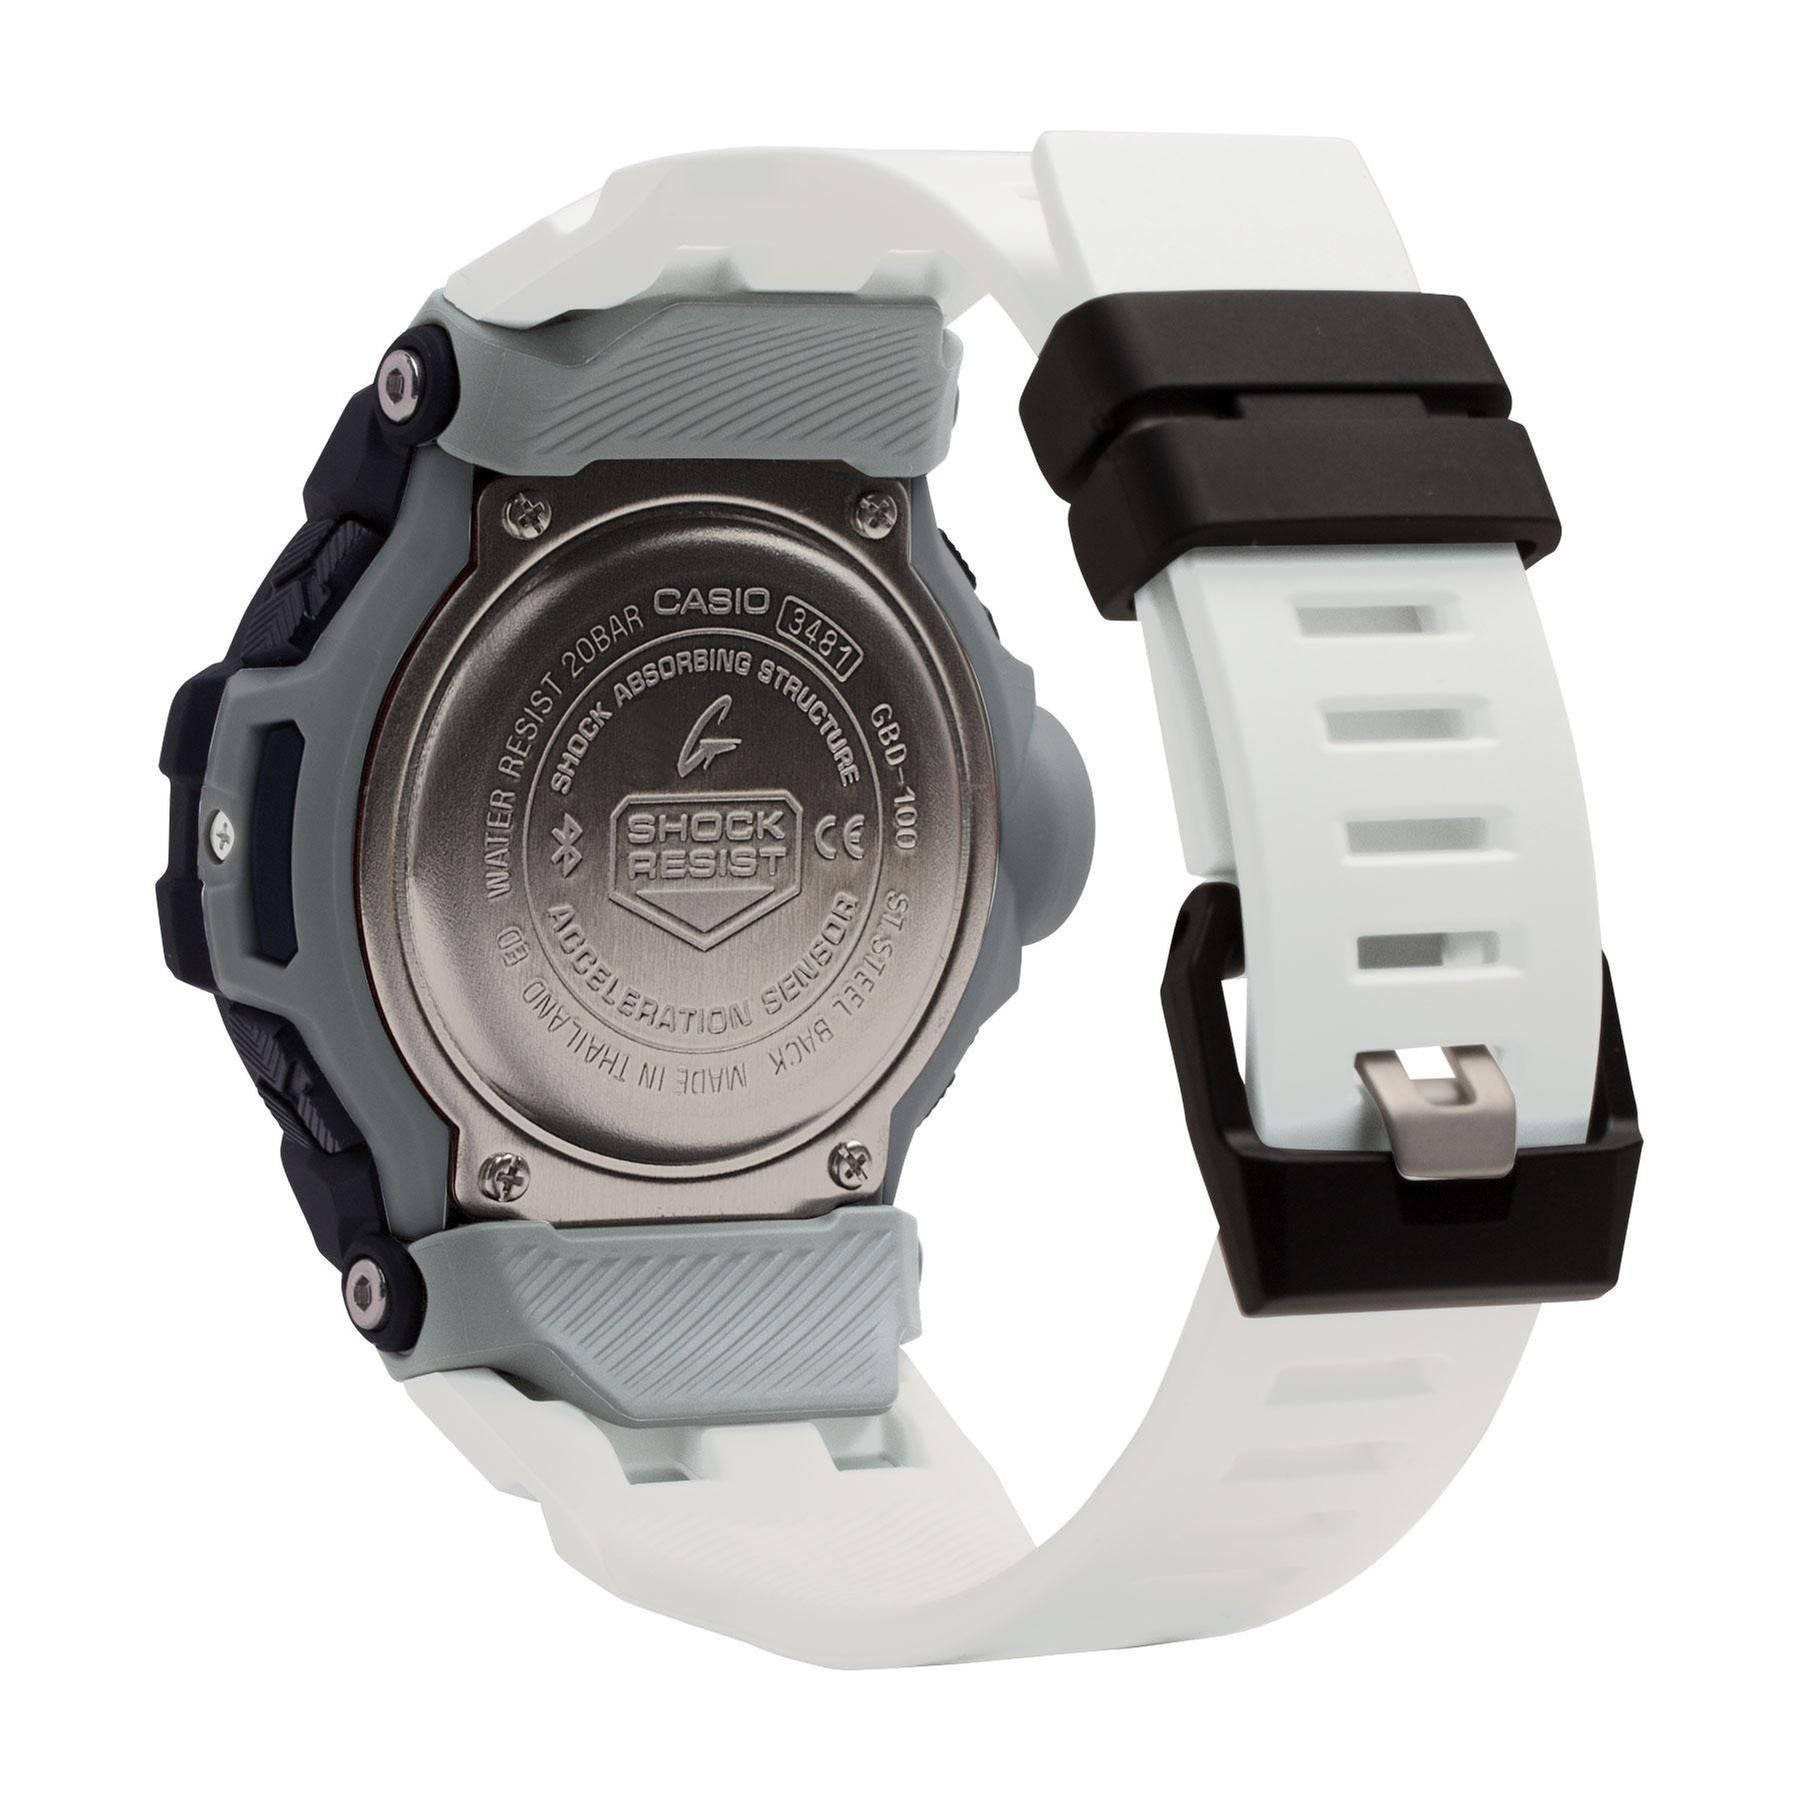 CASIO G-Shock GBD100-1A7 Move Watch Power Trainer White Blue G